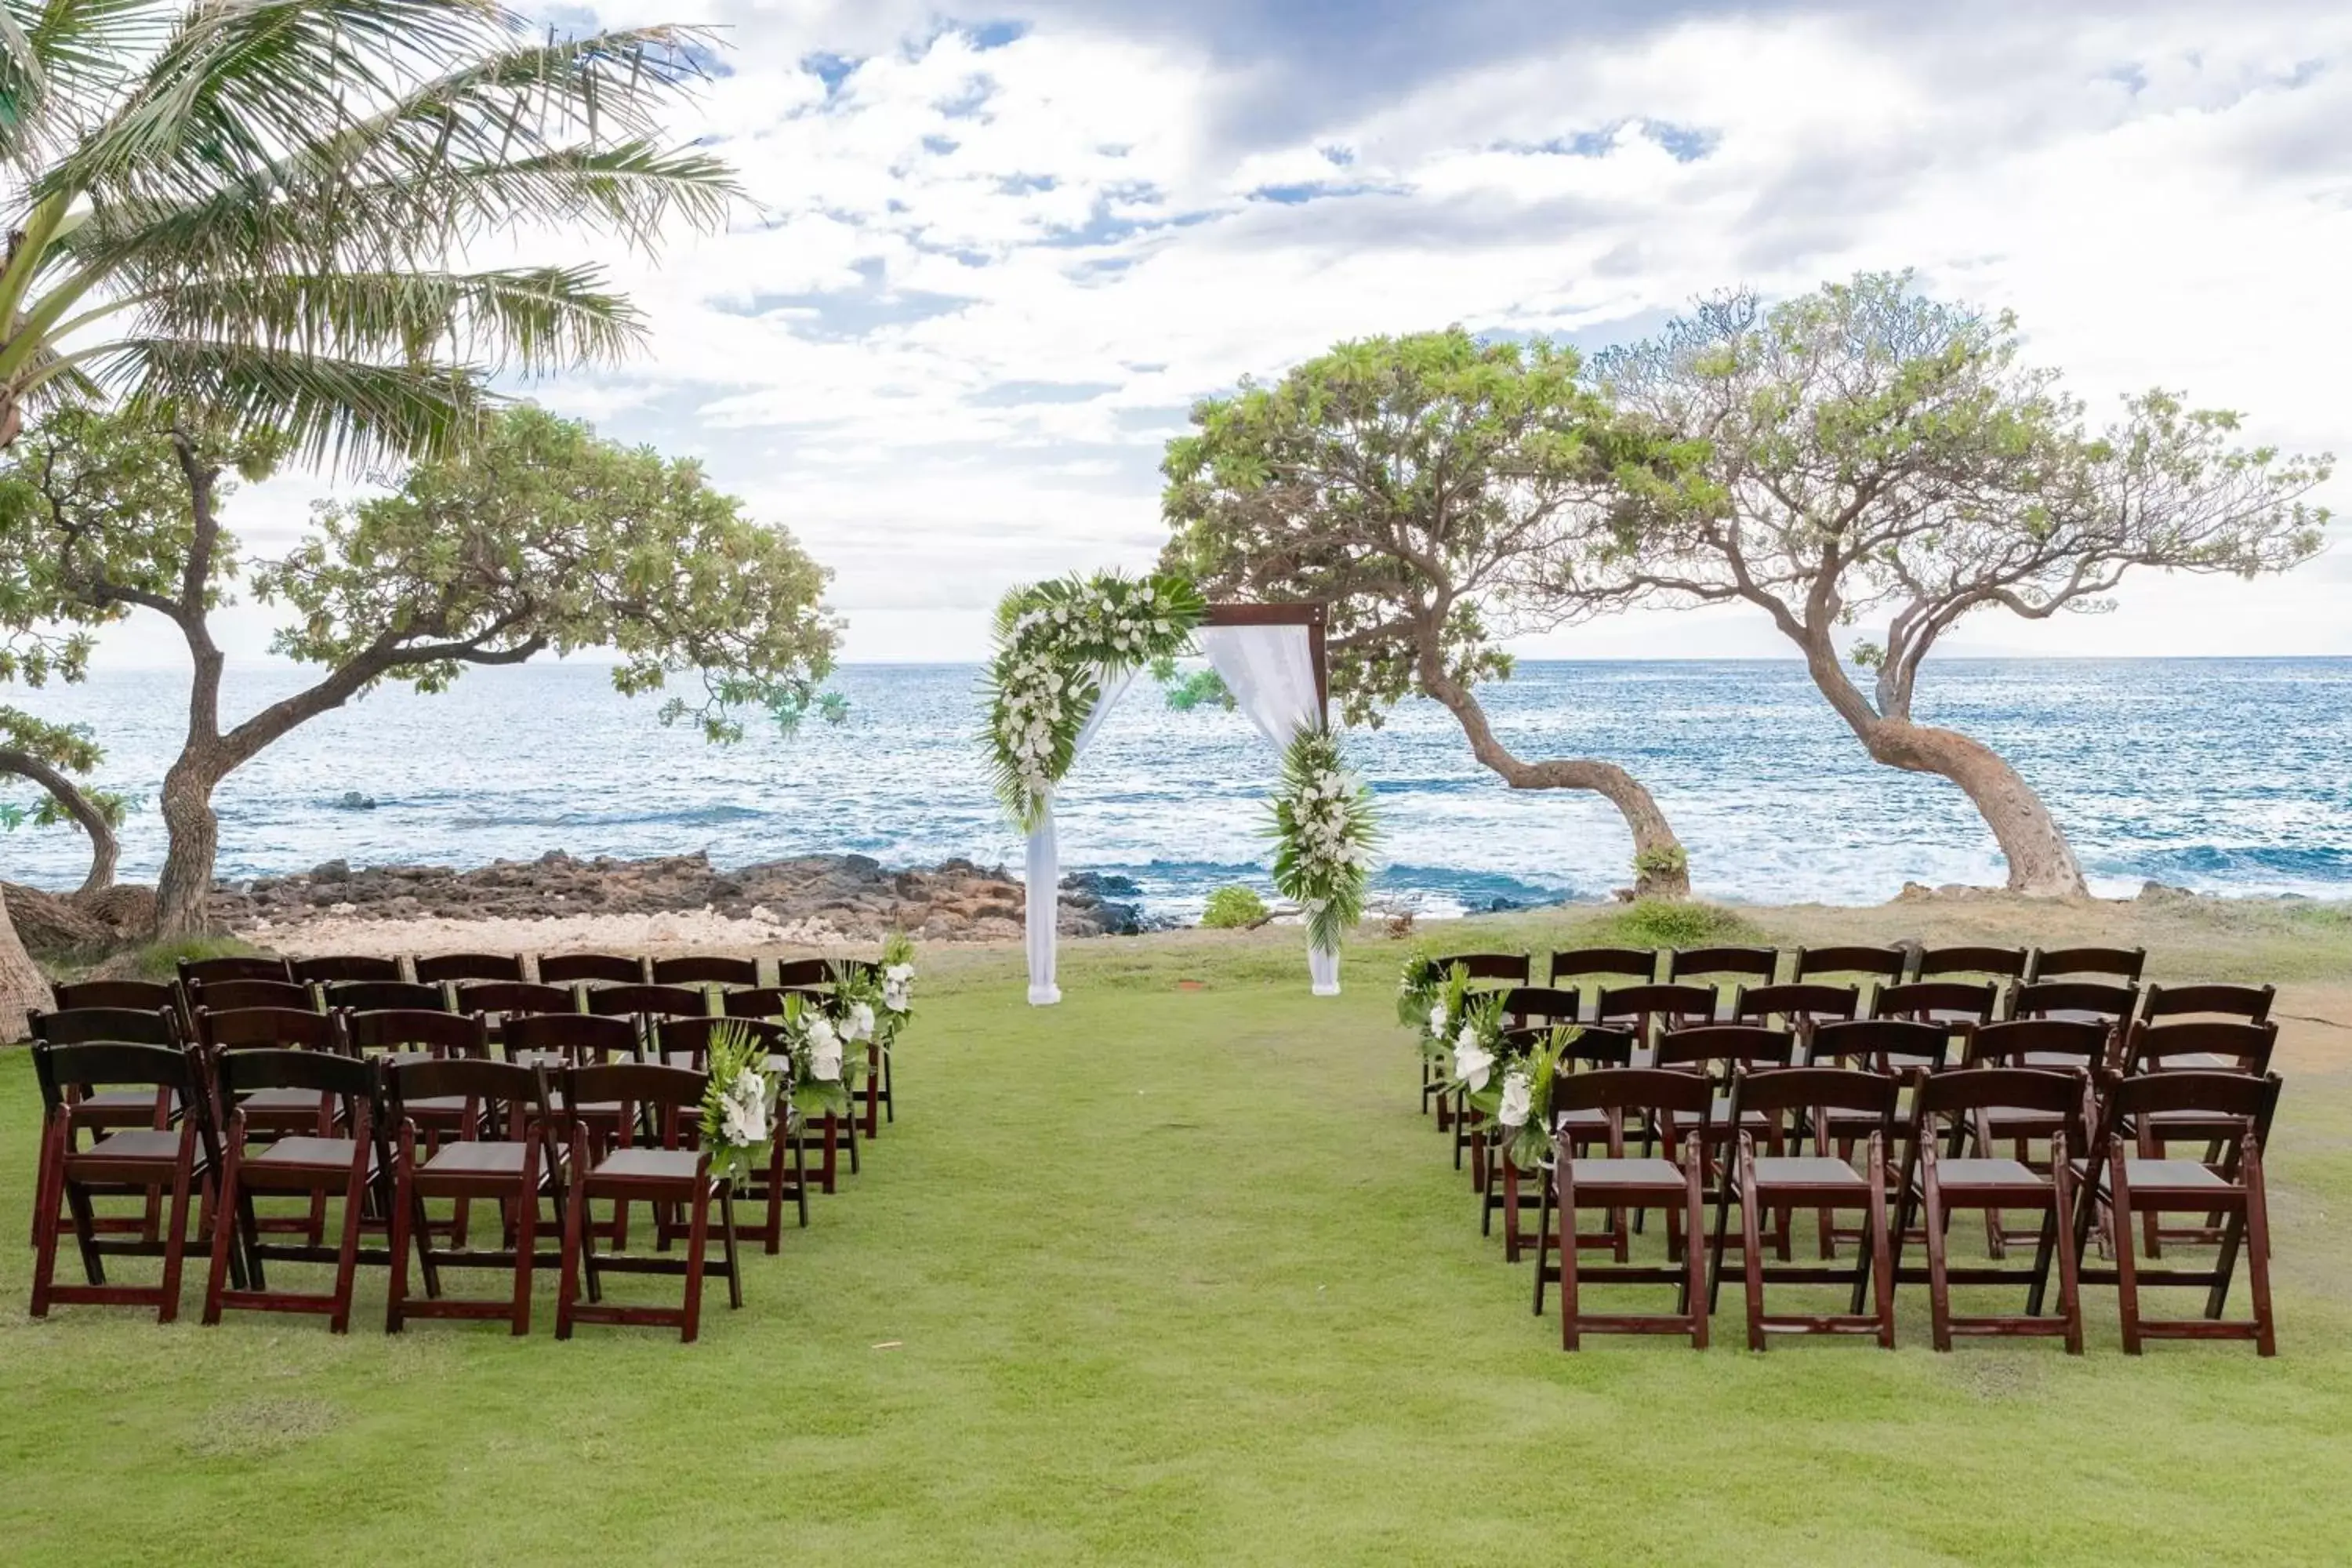 Banquet/Function facilities, Banquet Facilities in Wailea Beach Resort - Marriott, Maui